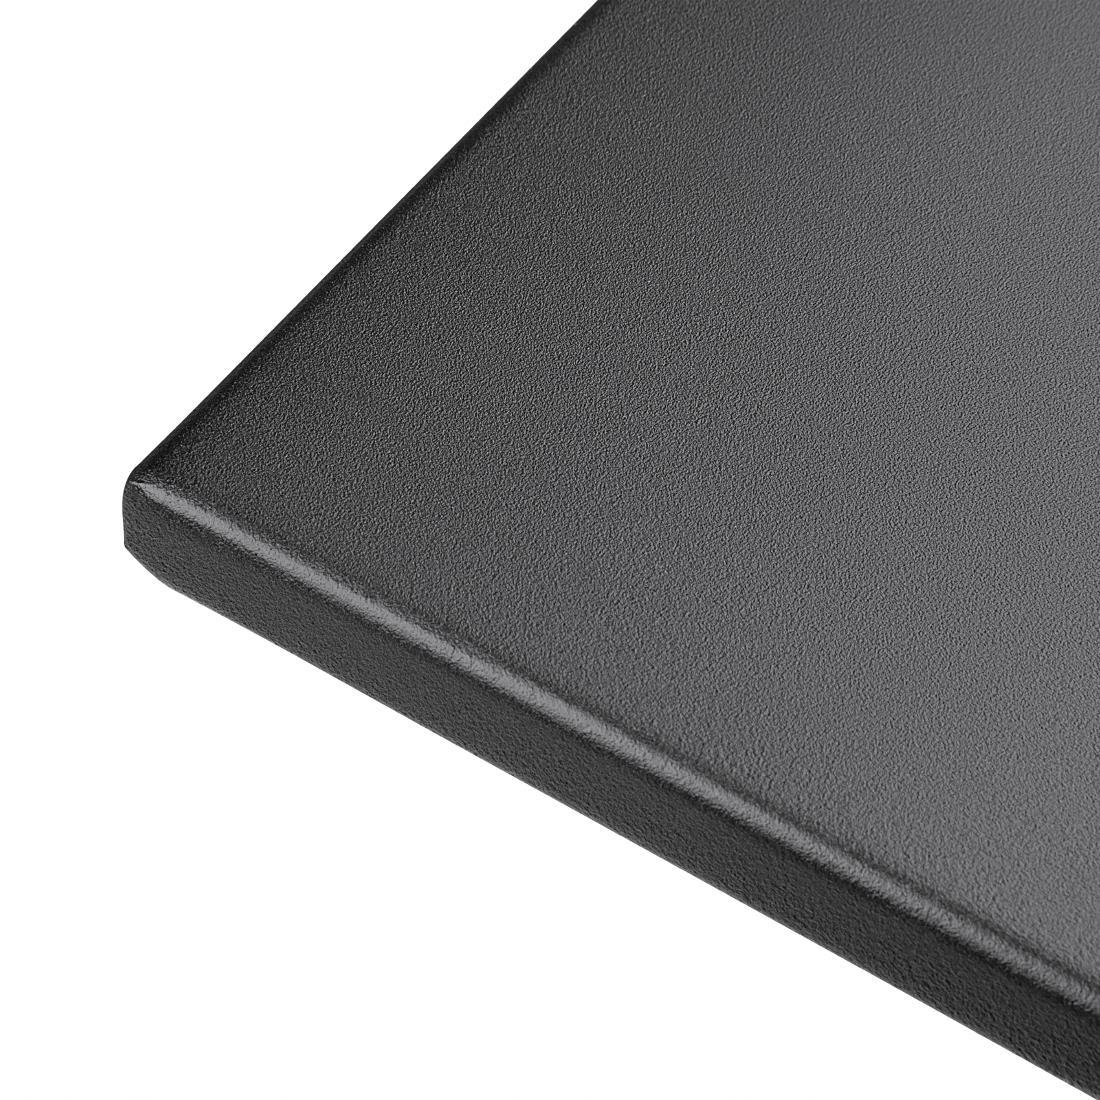 Bolero Black Square Pavement Style Steel Table - GK989  - 5